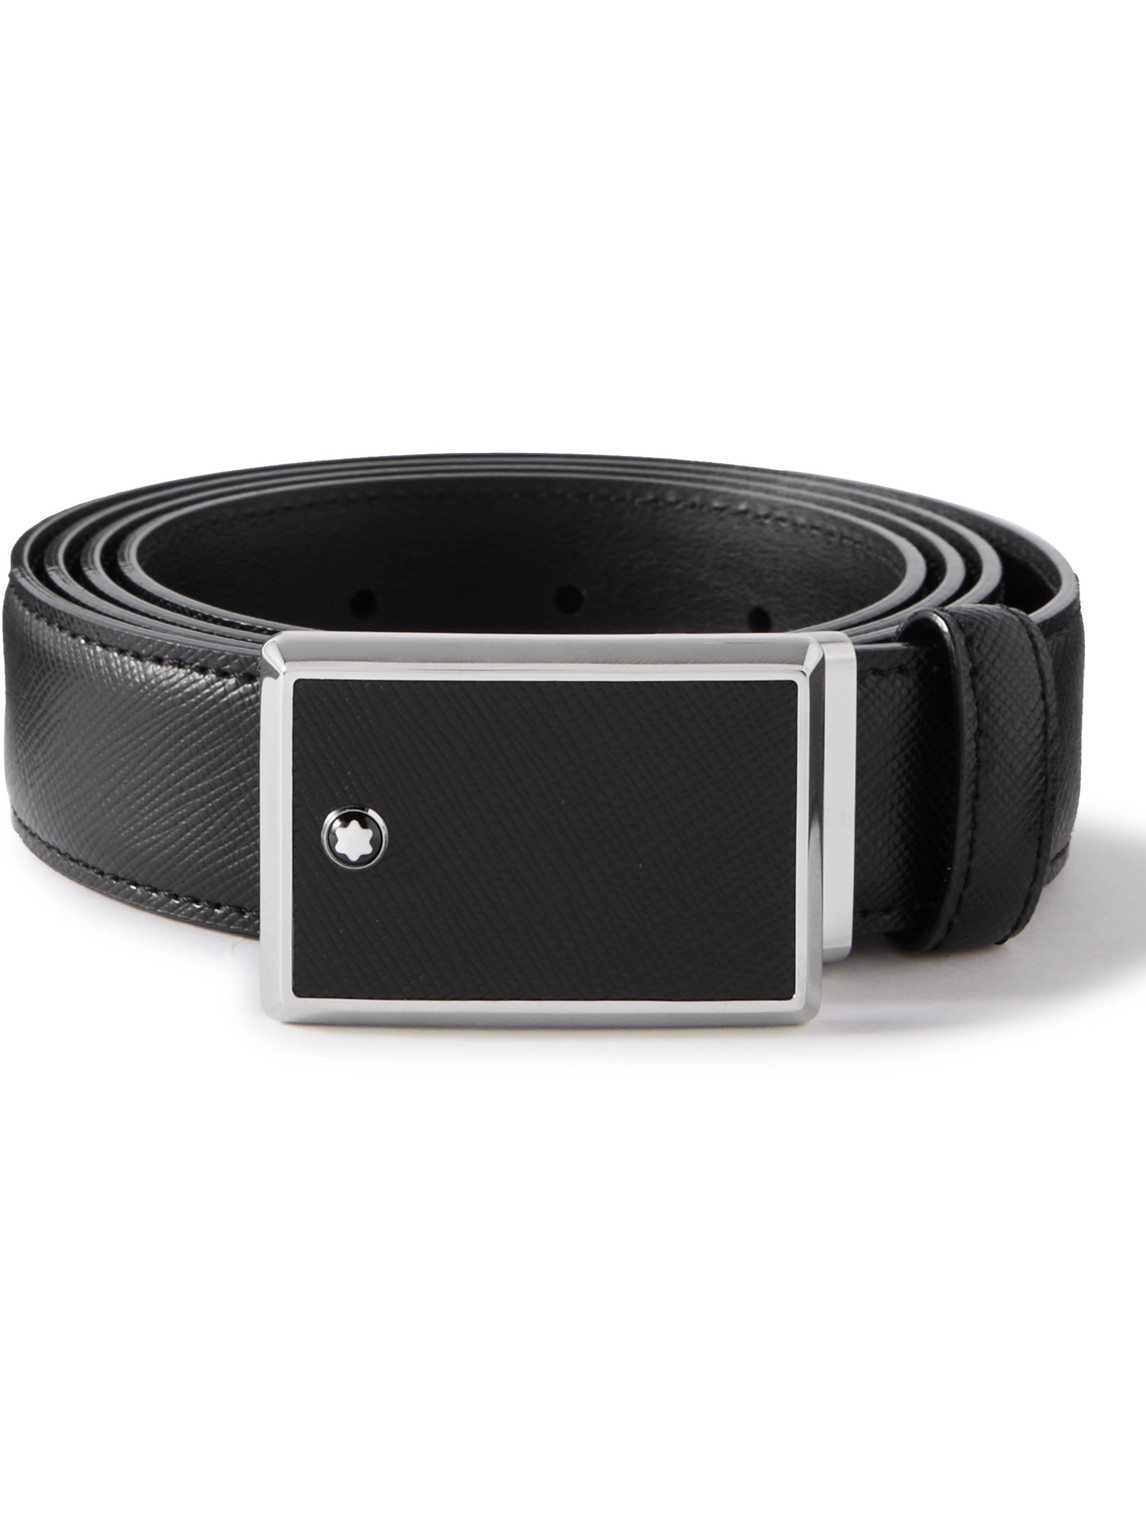 Montblanc 3cm Cross-grain Leather Belt In Black